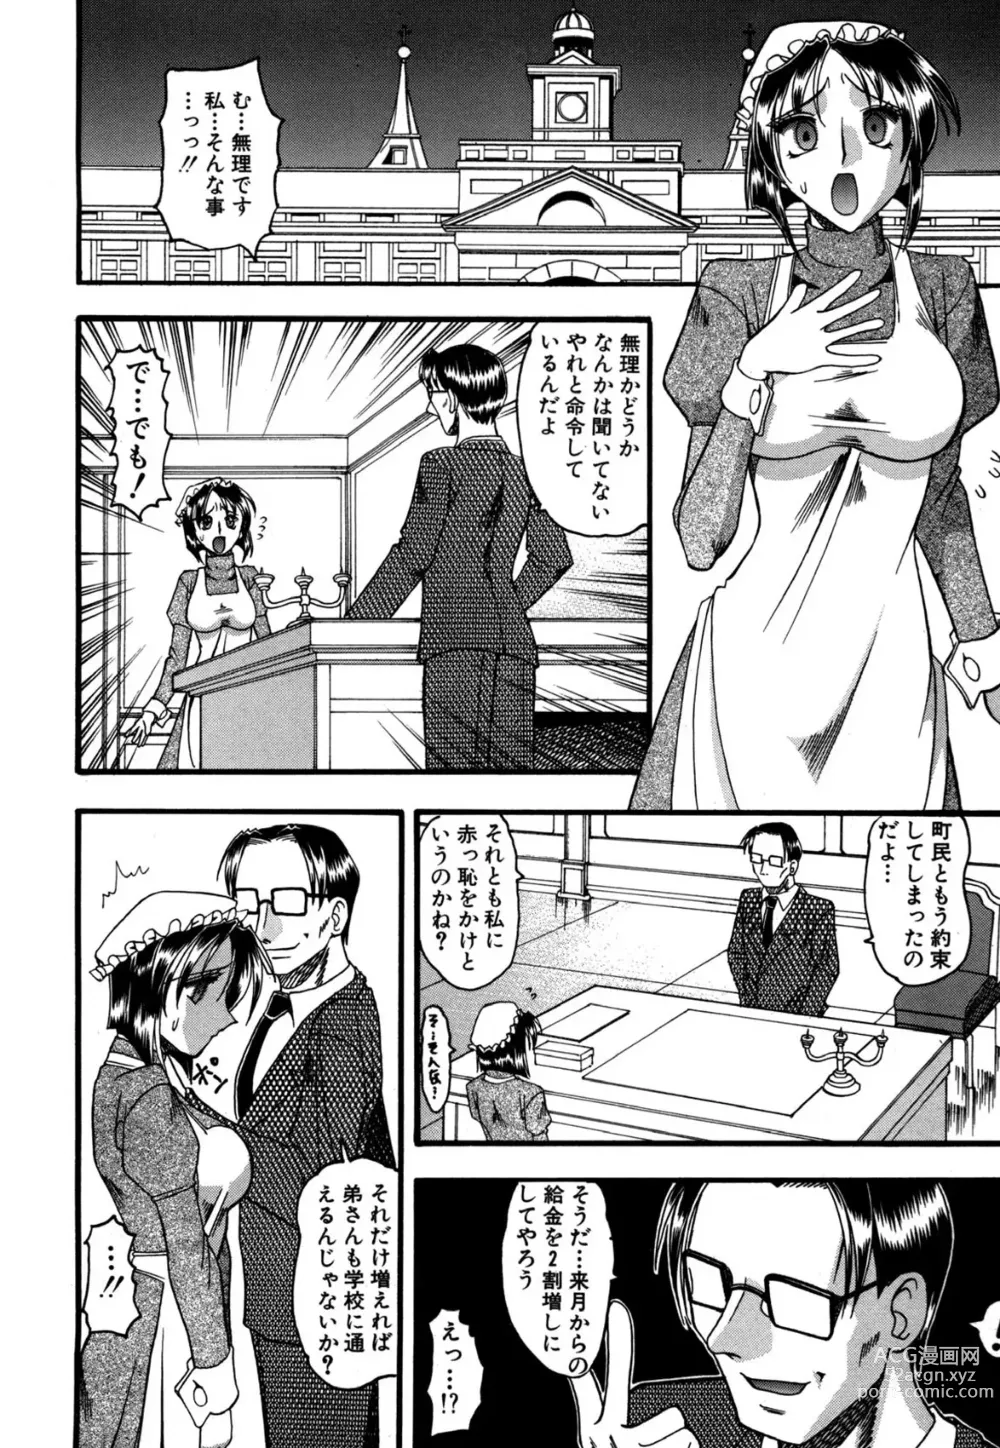 Page 9 of manga Mizugism